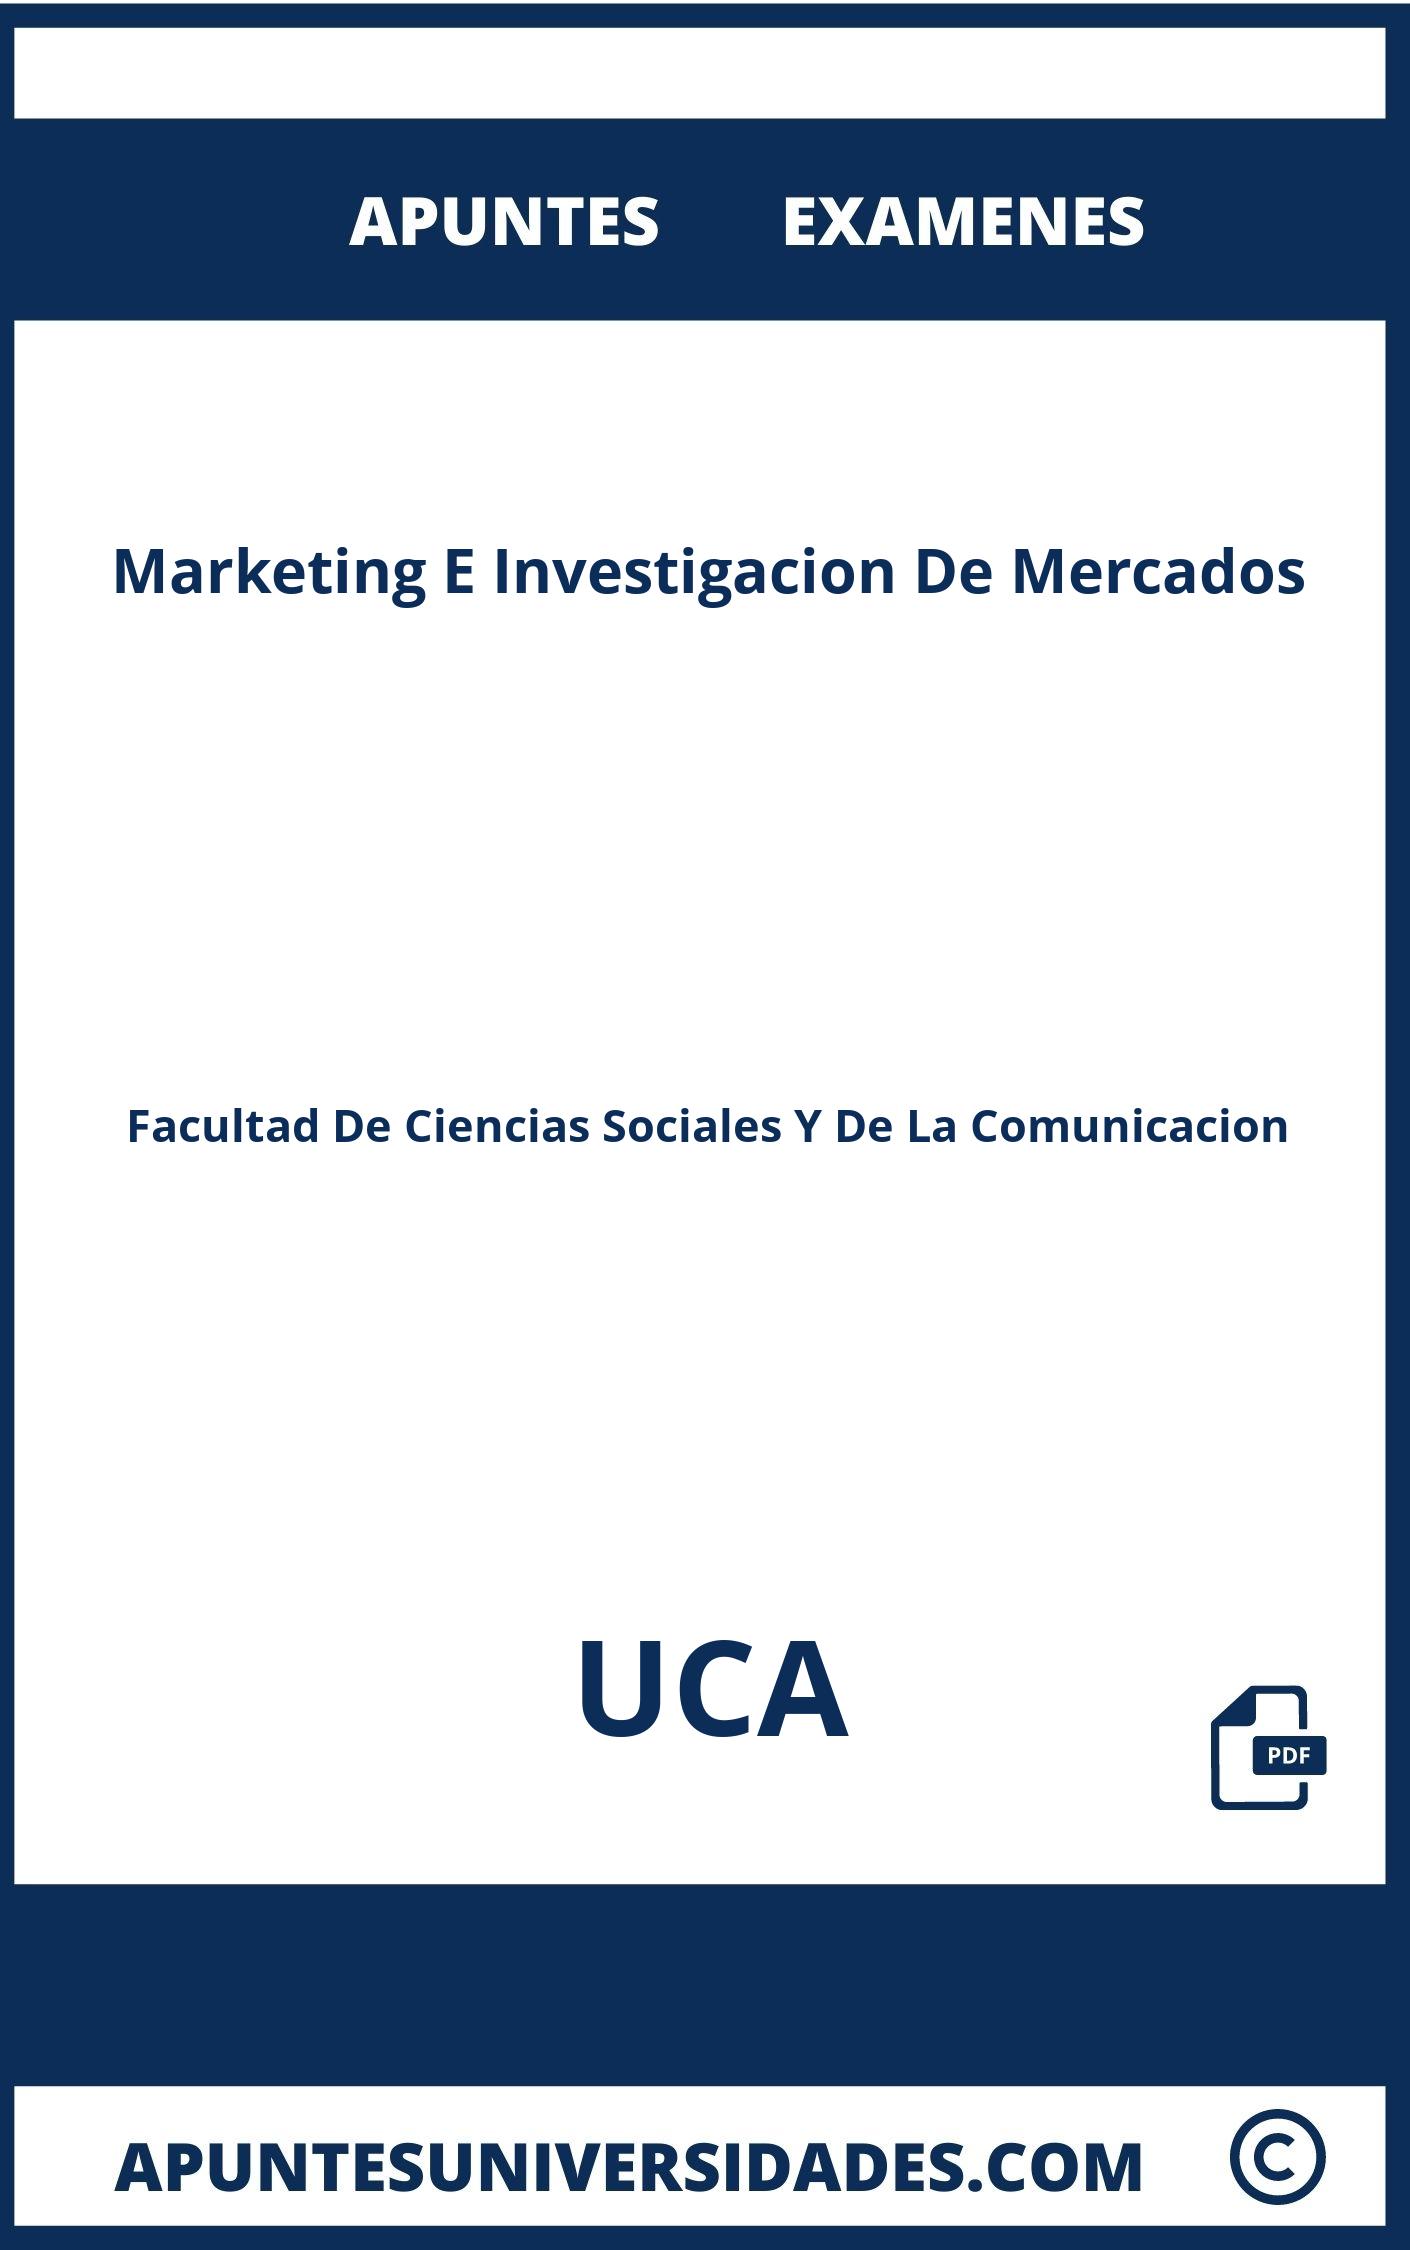 Marketing E Investigacion De Mercados UCA Examenes Apuntes